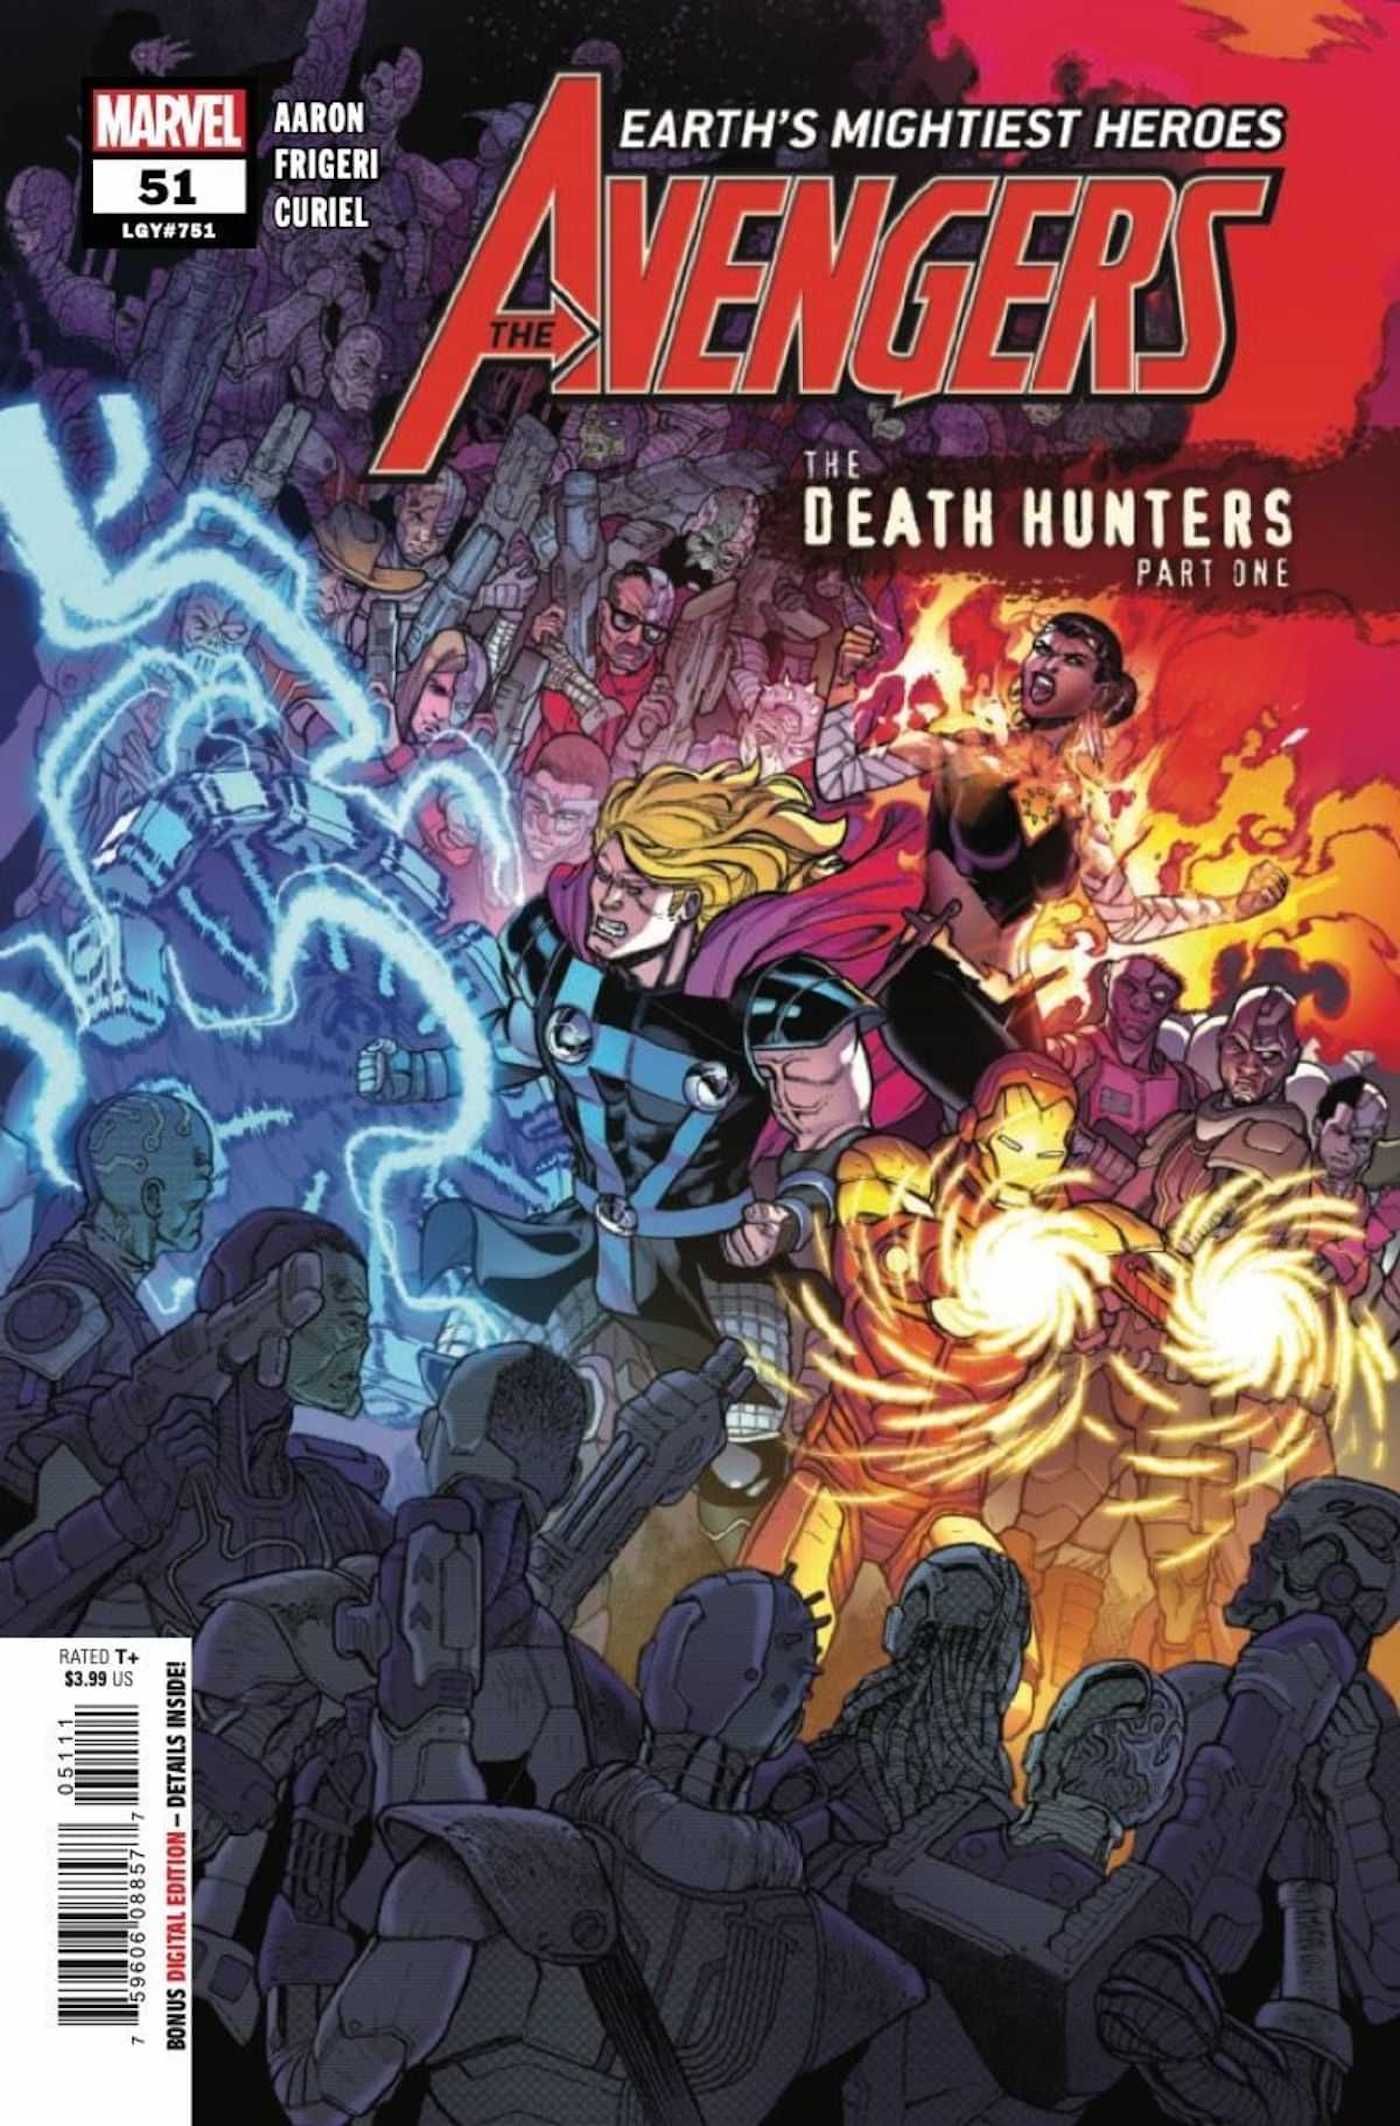 Thor vs Dark Phoenix Kicks Off the Avengers’ Multiversal War